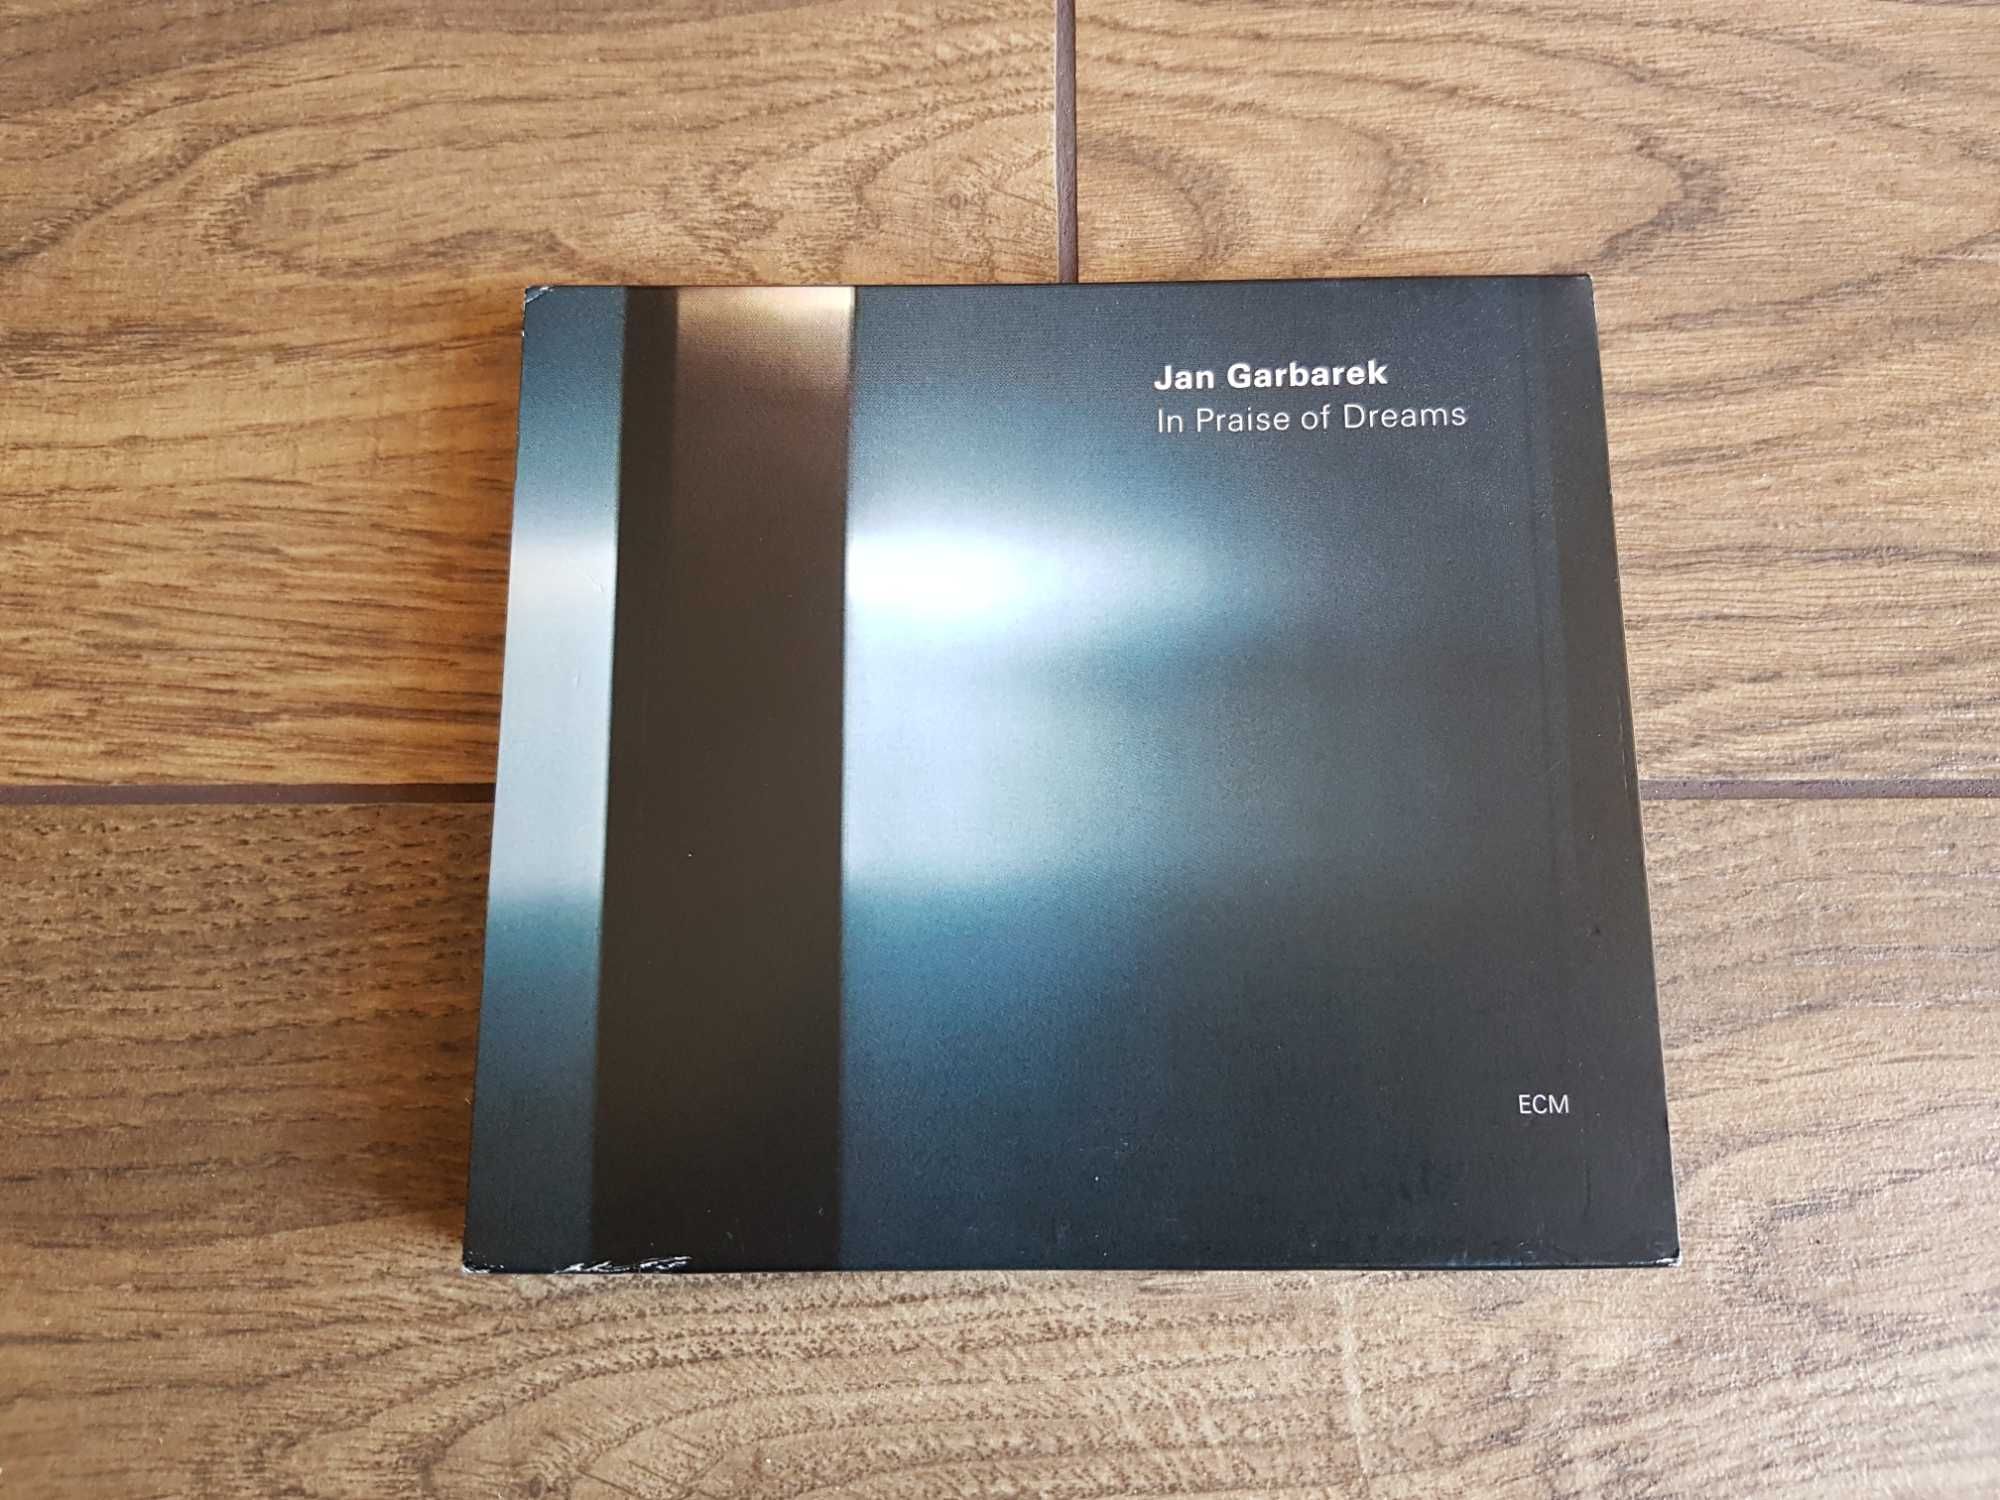 płyta CD: Jan Garbarek "In Praise Of Dreams" -  ECM Records